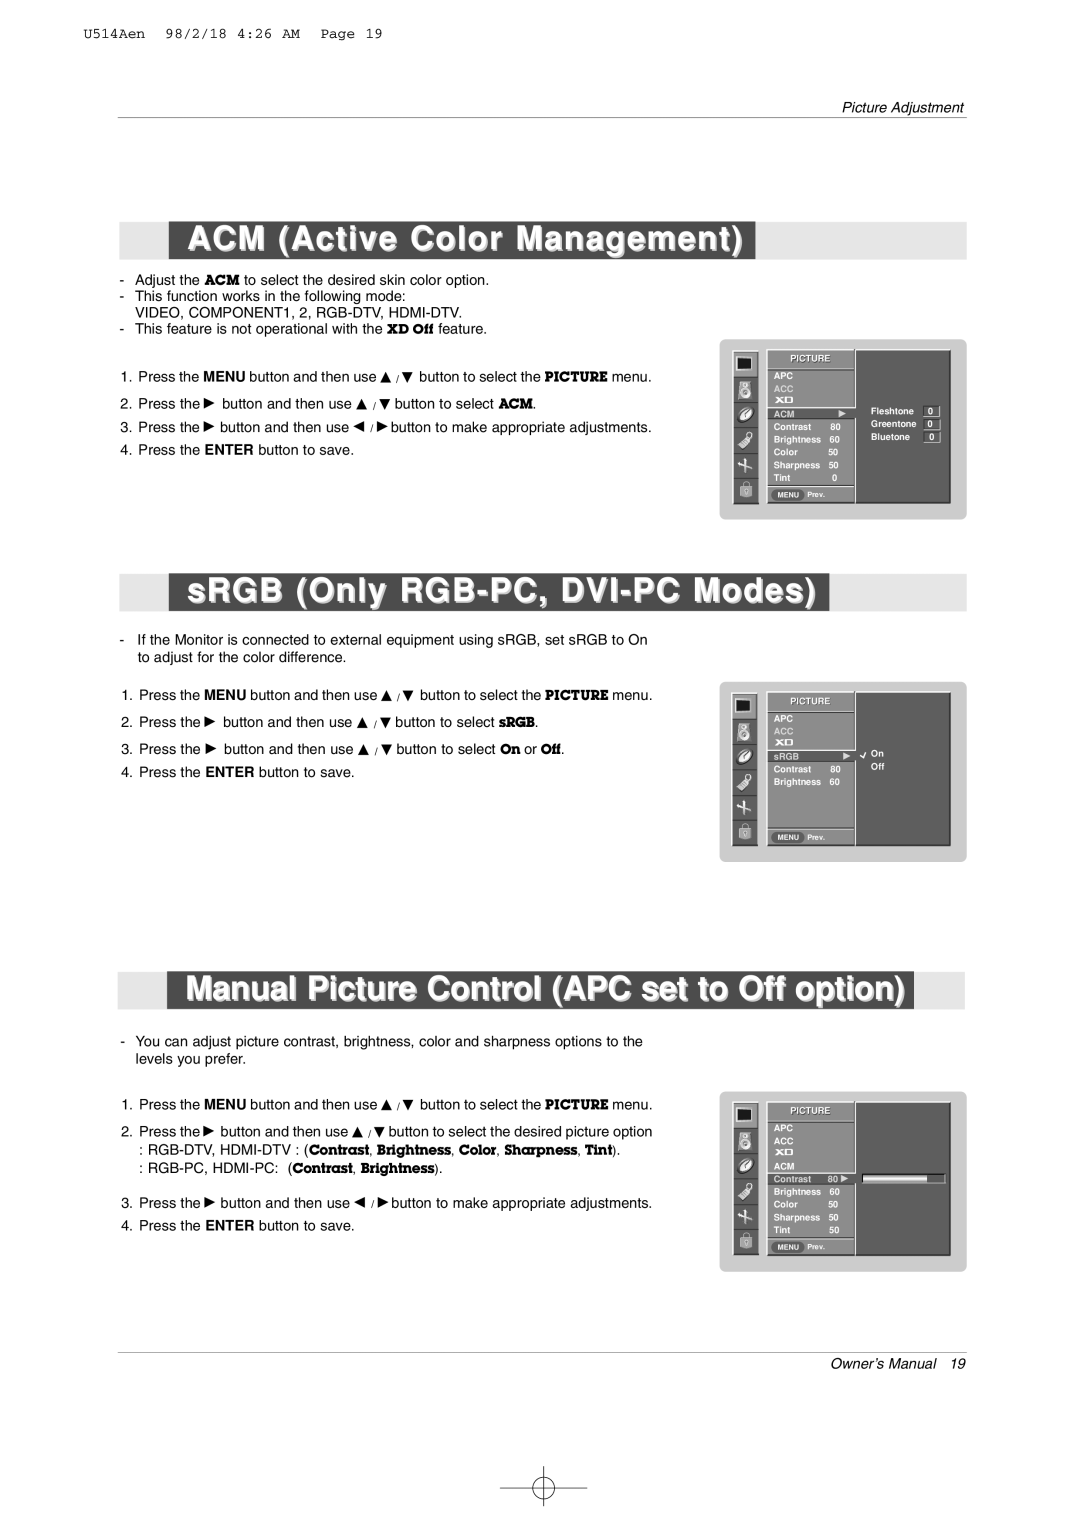 LG Electronics 42PM1M owner manual ACM Active Color Management, sRGB Only RGB-PC, DVI-PC Modes 